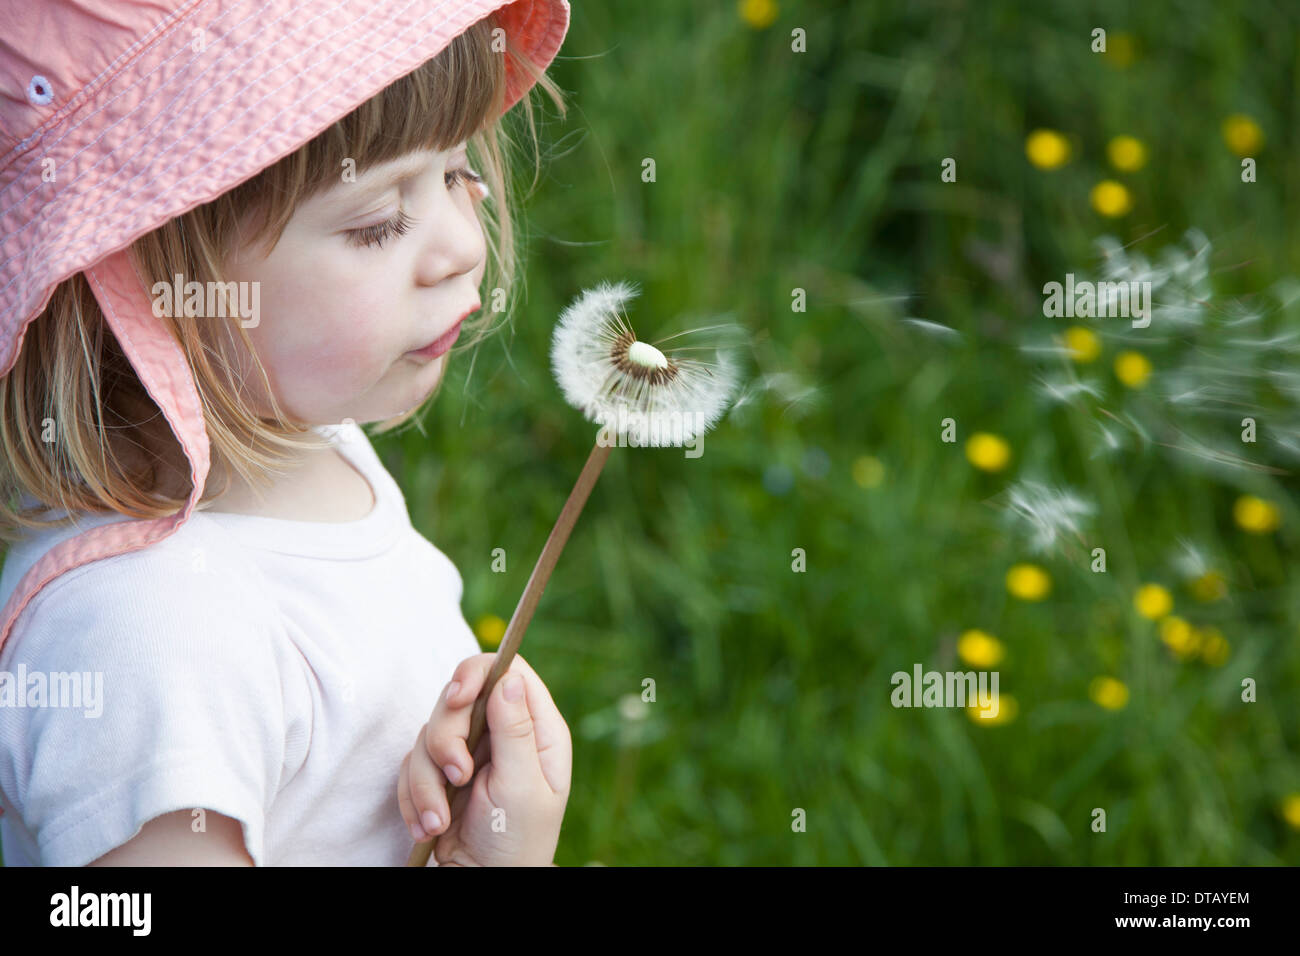 Girl blowing dandelion flower, close-up Banque D'Images